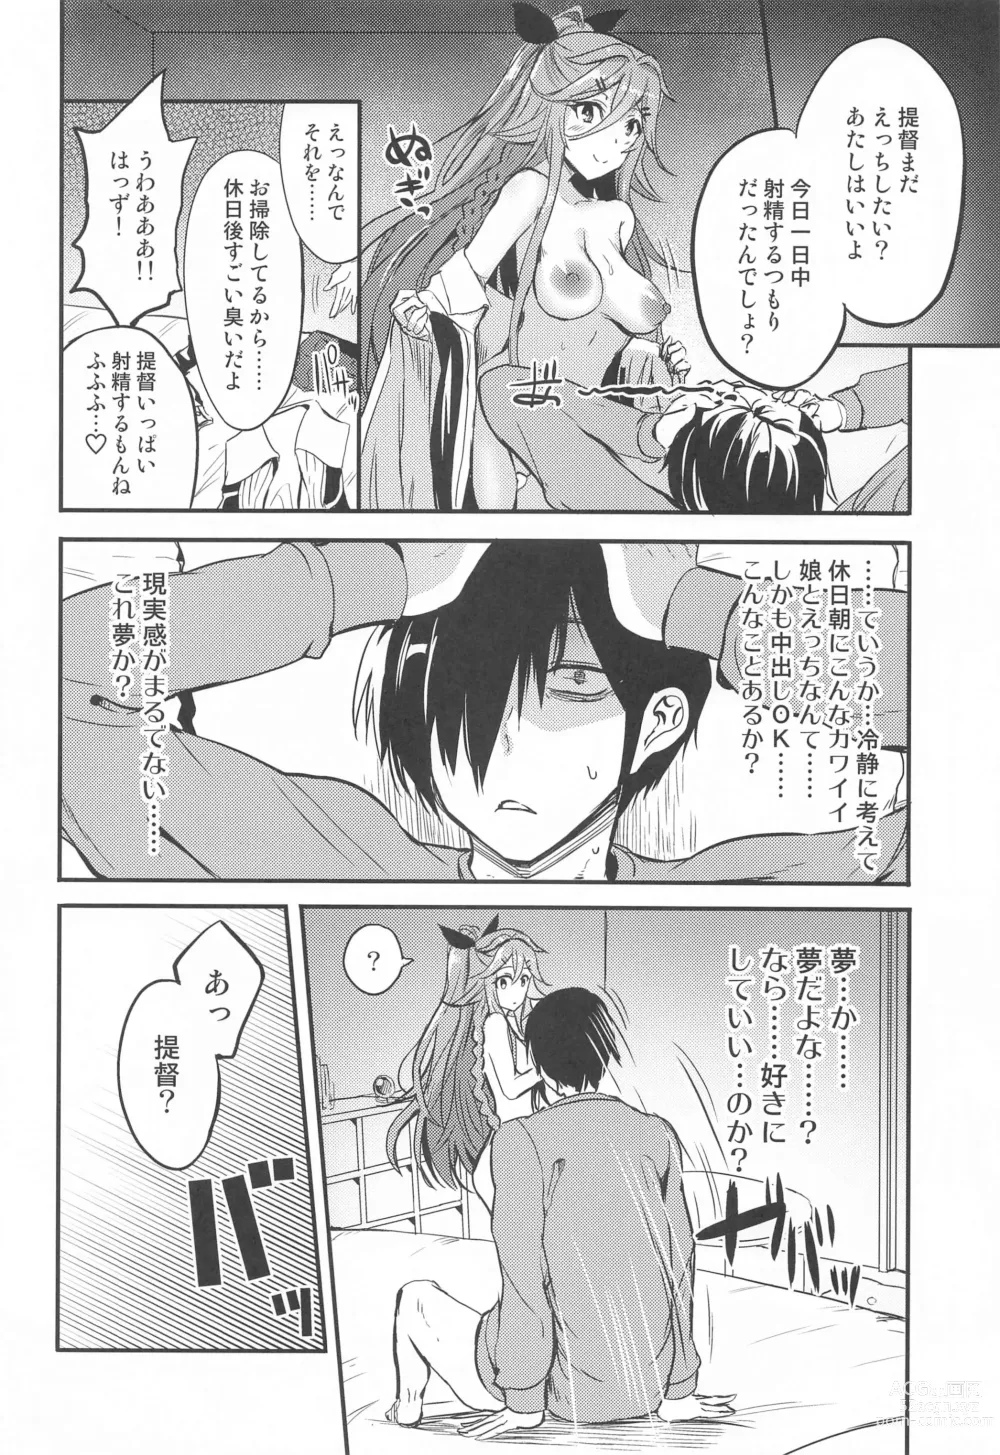 Page 13 of doujinshi Yamakaze to Nakayoku Naru made